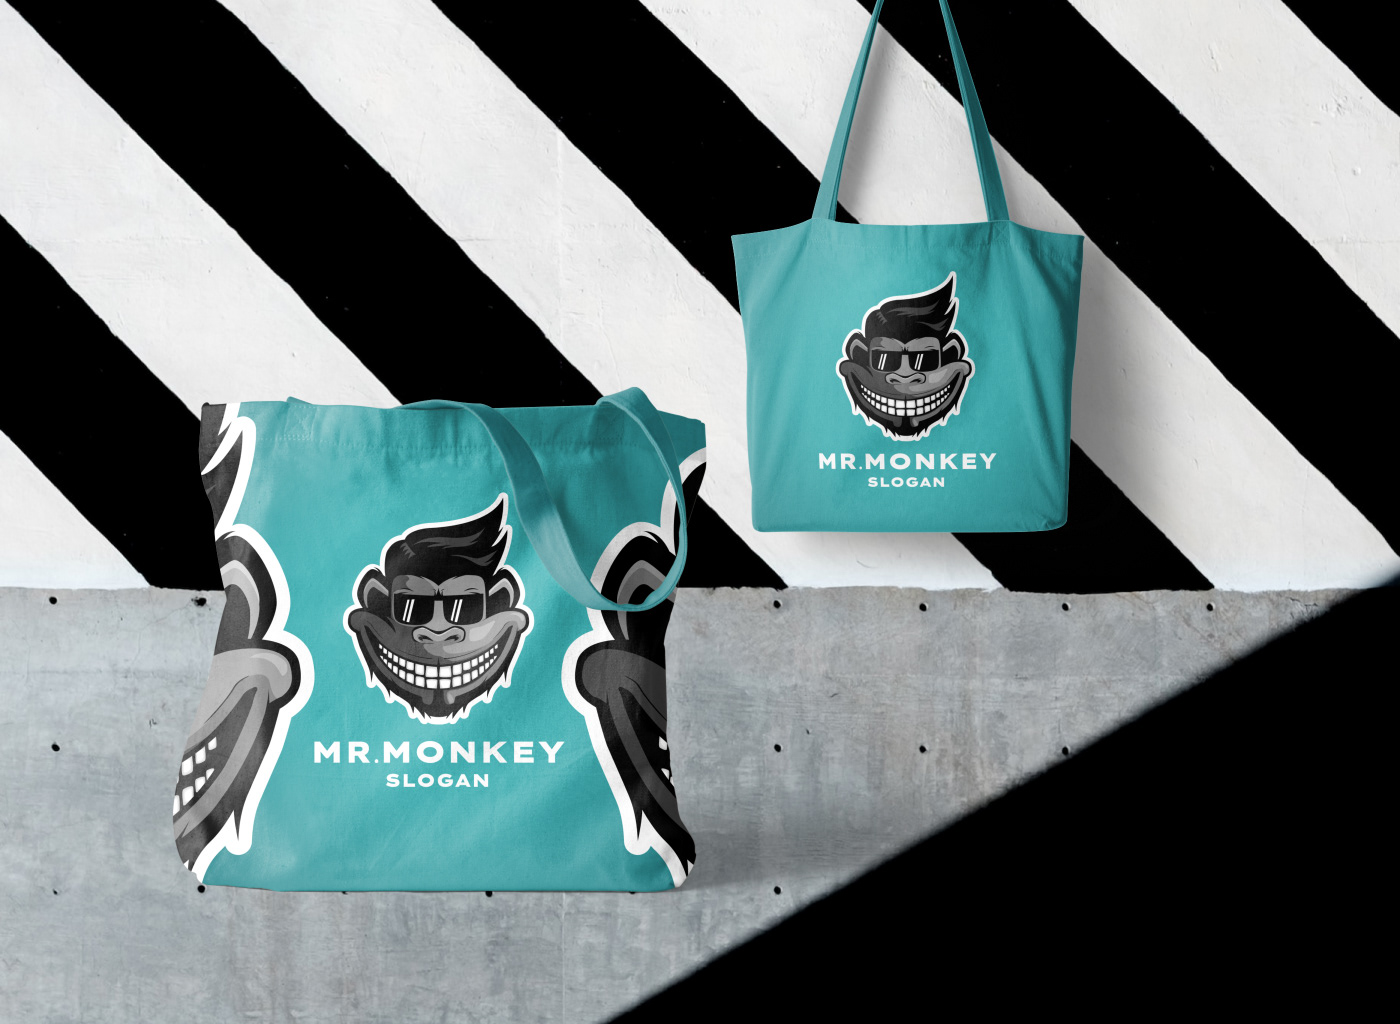 cheshire cat glasses logo Logo Design monkey monkey logo monkeys smile teeth tooth